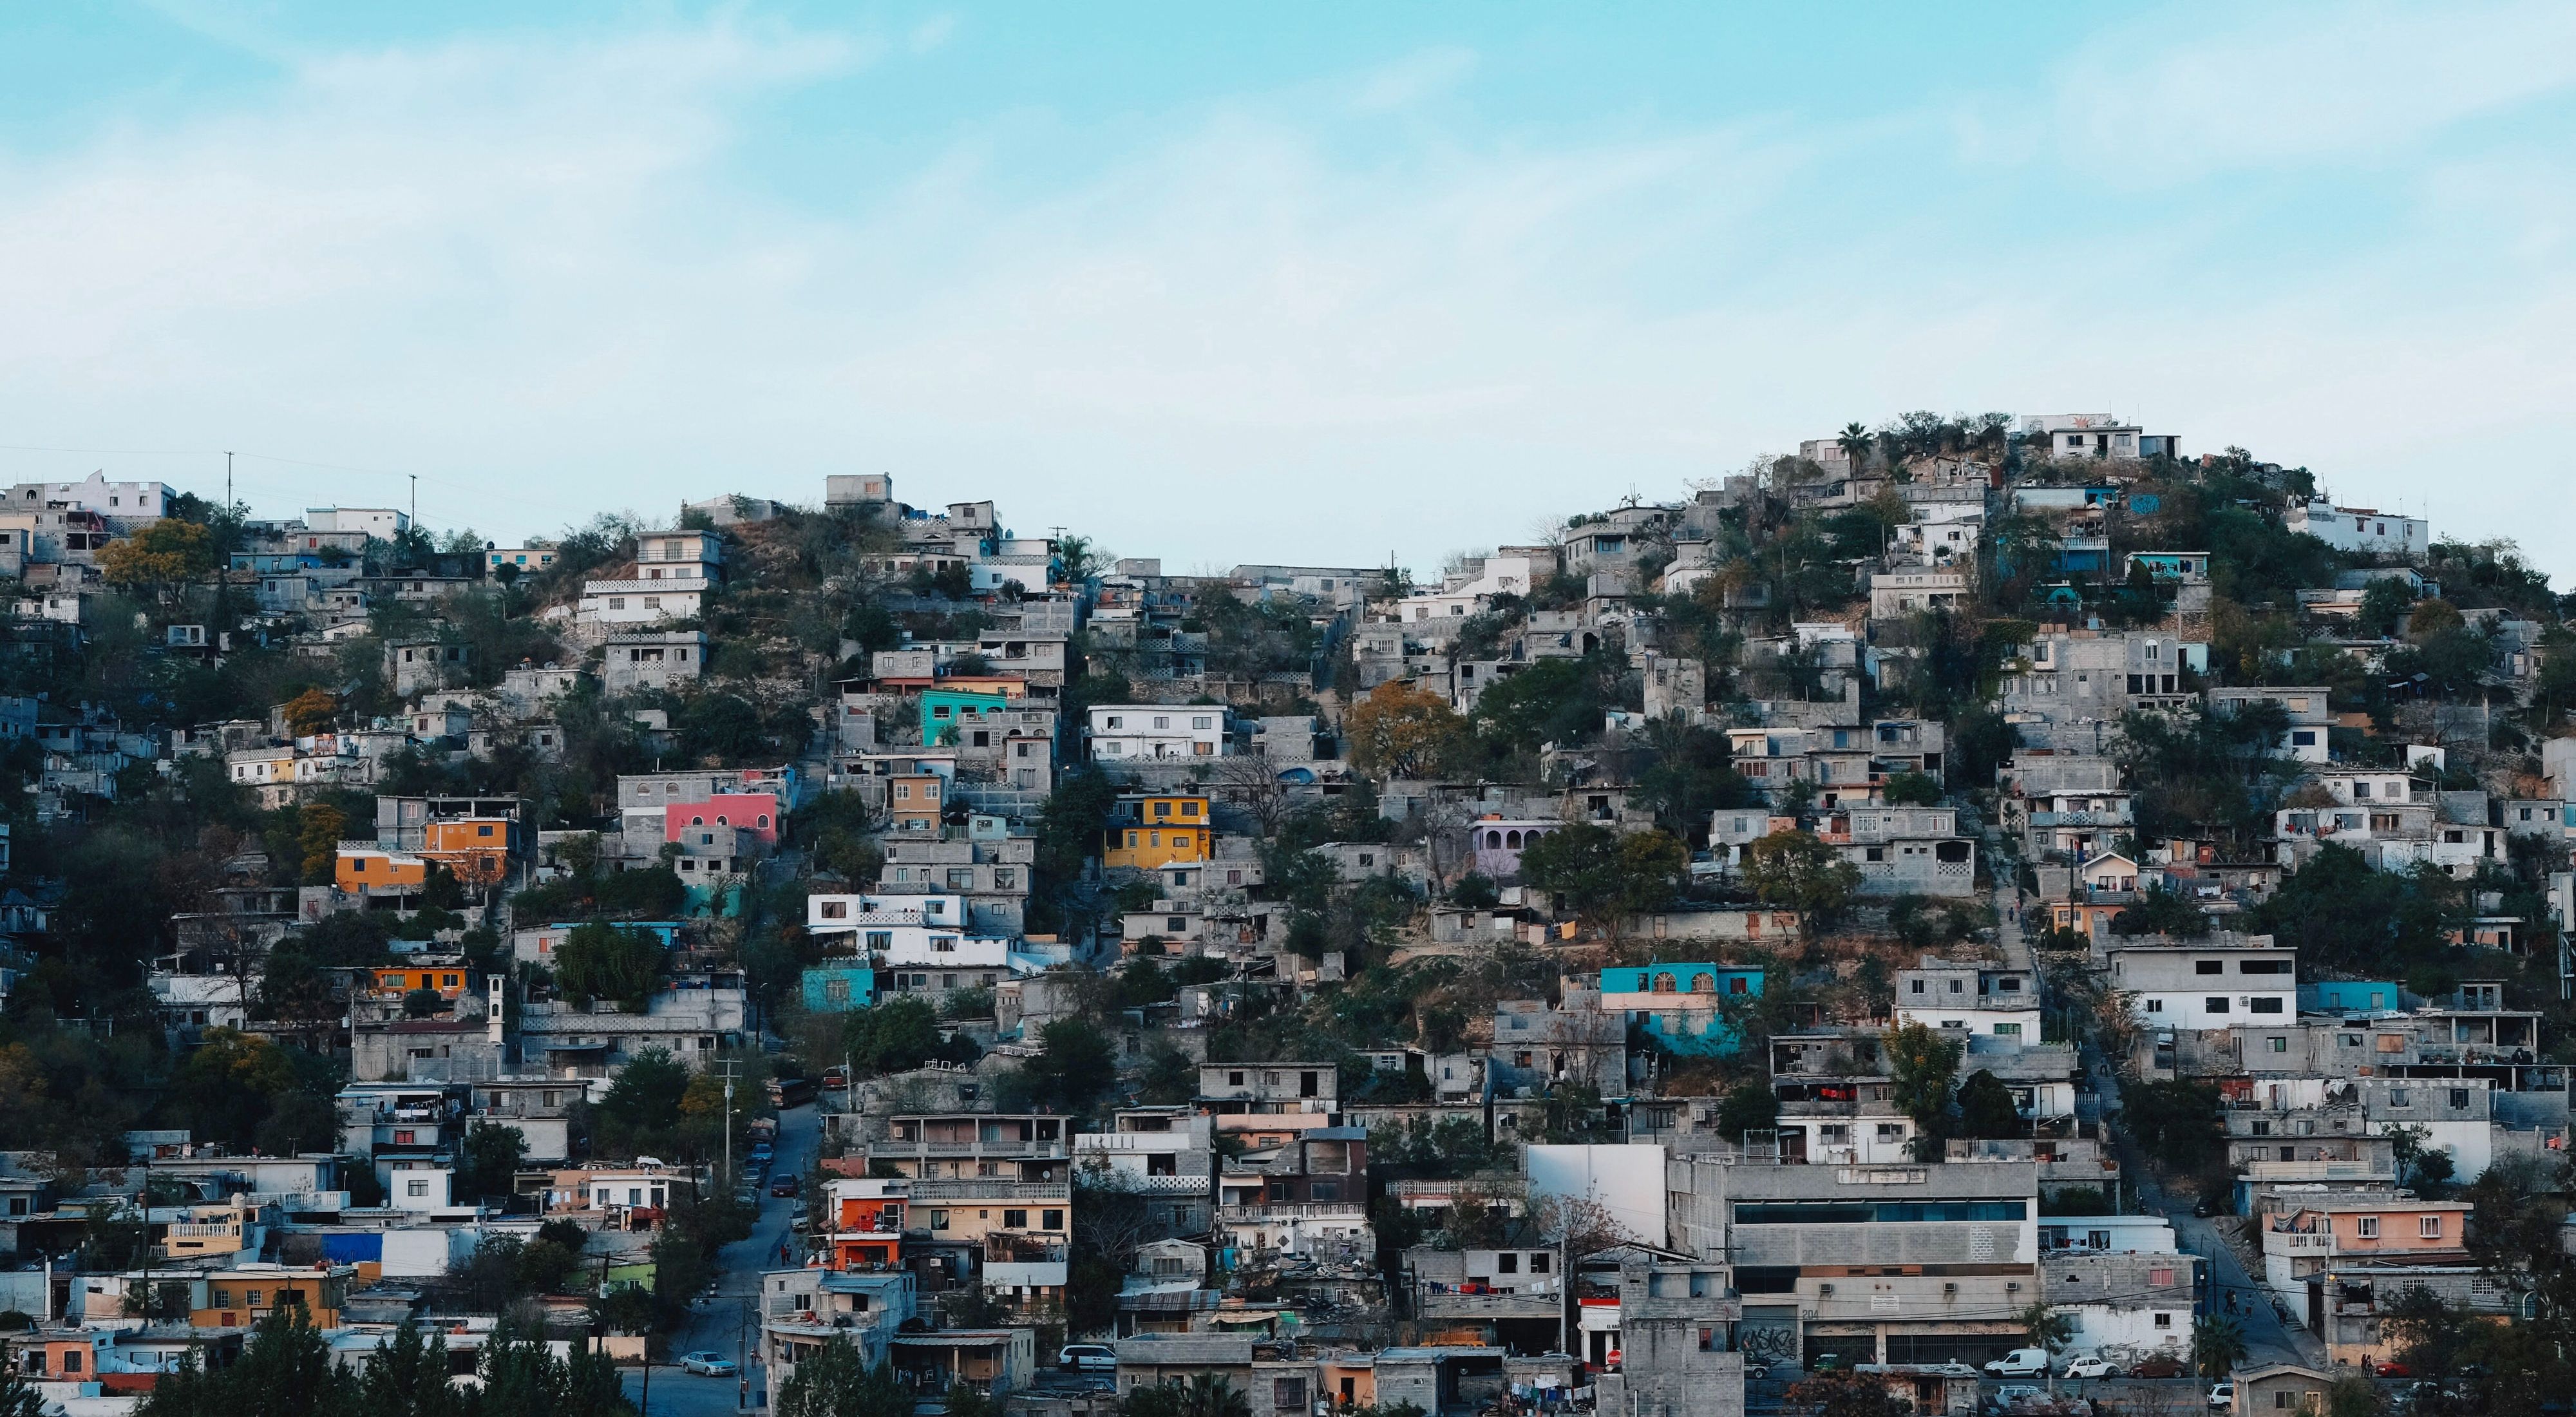 Developed hillsides loom over the city of Monterrey.